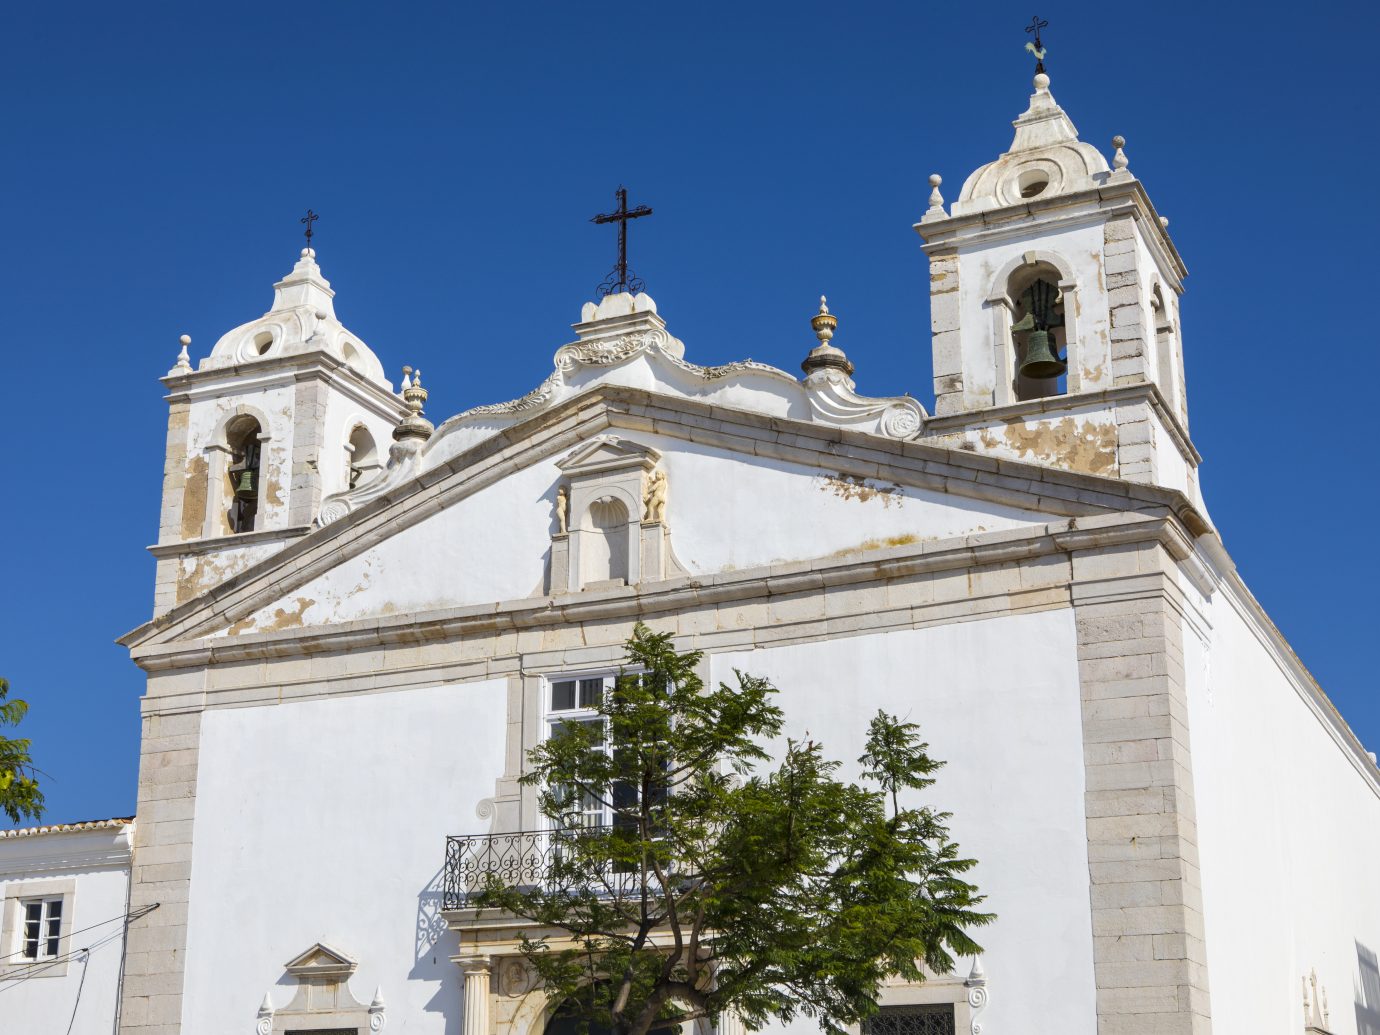 The exterior of Igreja de Santa Maria, or Church of Santa Maria, in the historic old town of Lagos in Portugal.